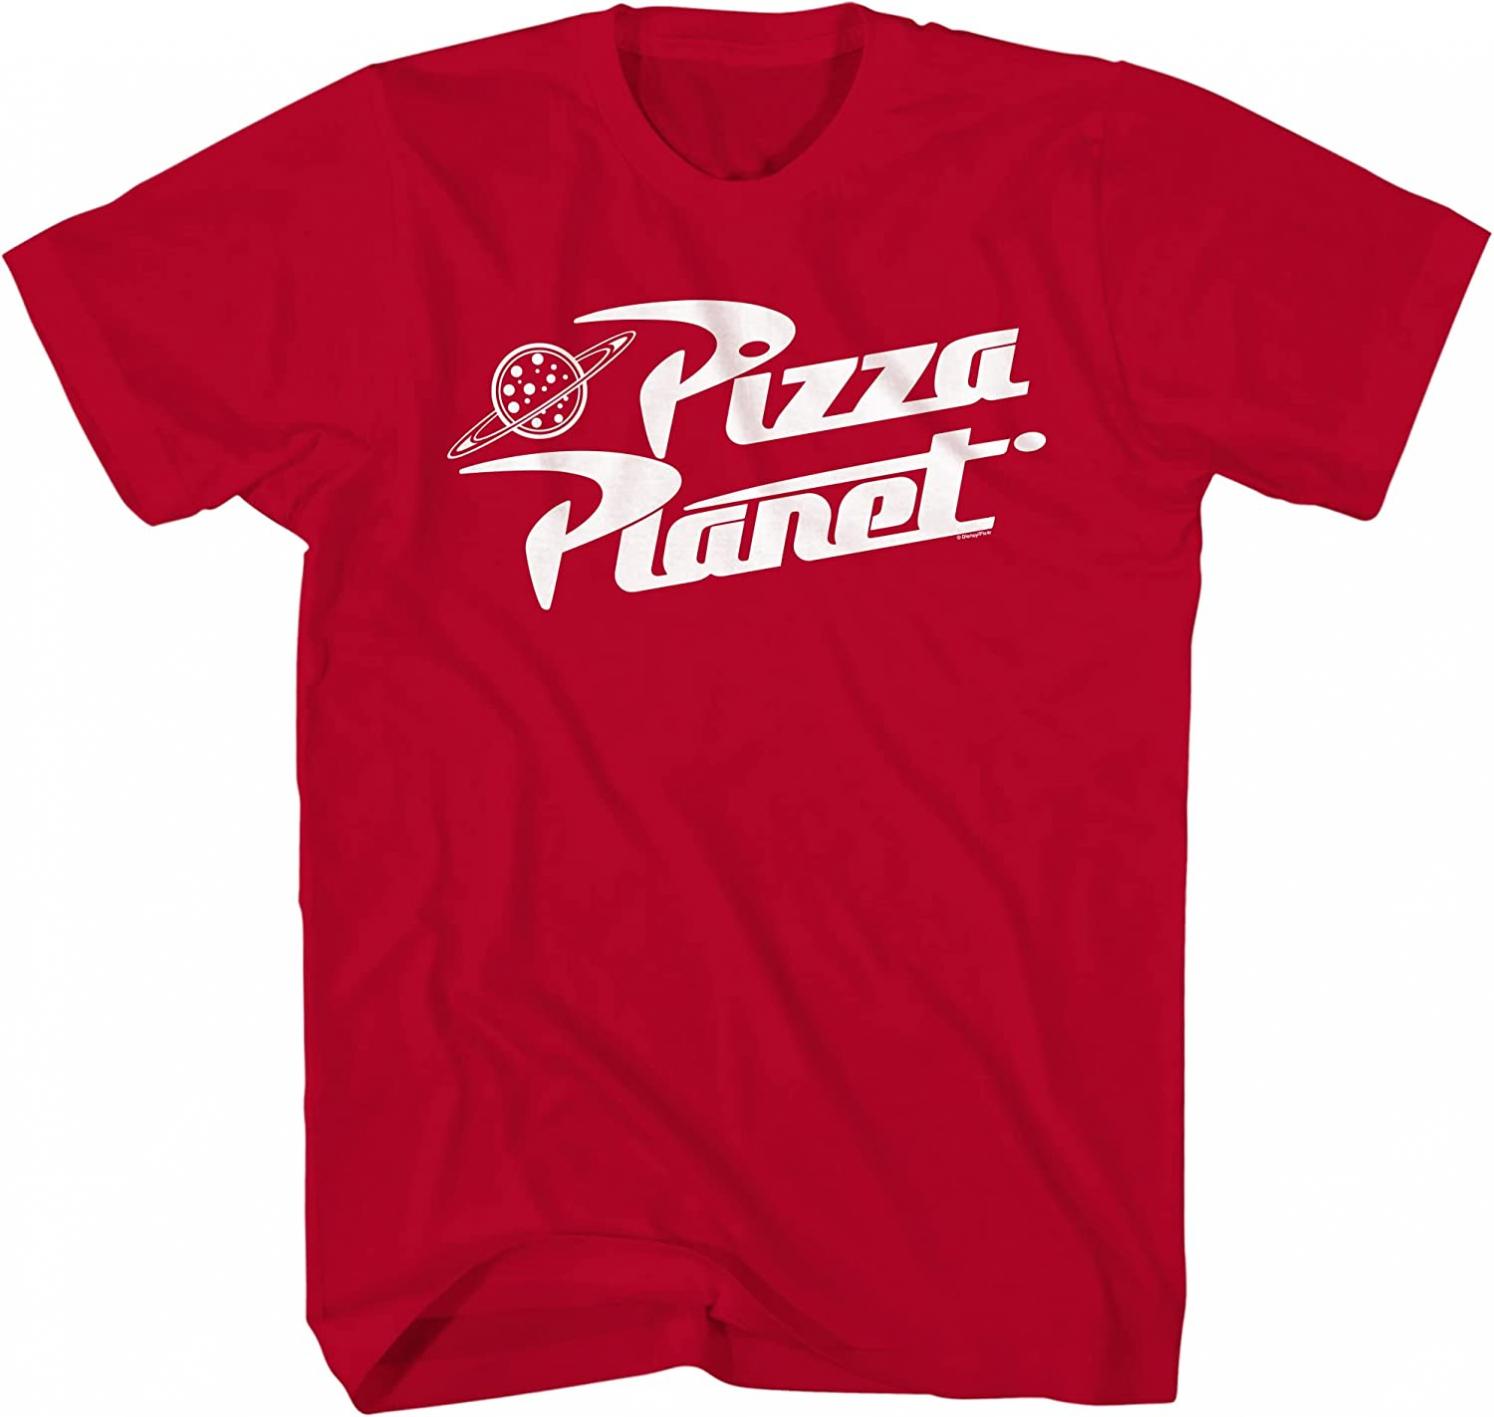 Disney Pixar Toy Story Pizza Planet Boys Youth Humor Funny Tee T-Shirt(Red,Medium)